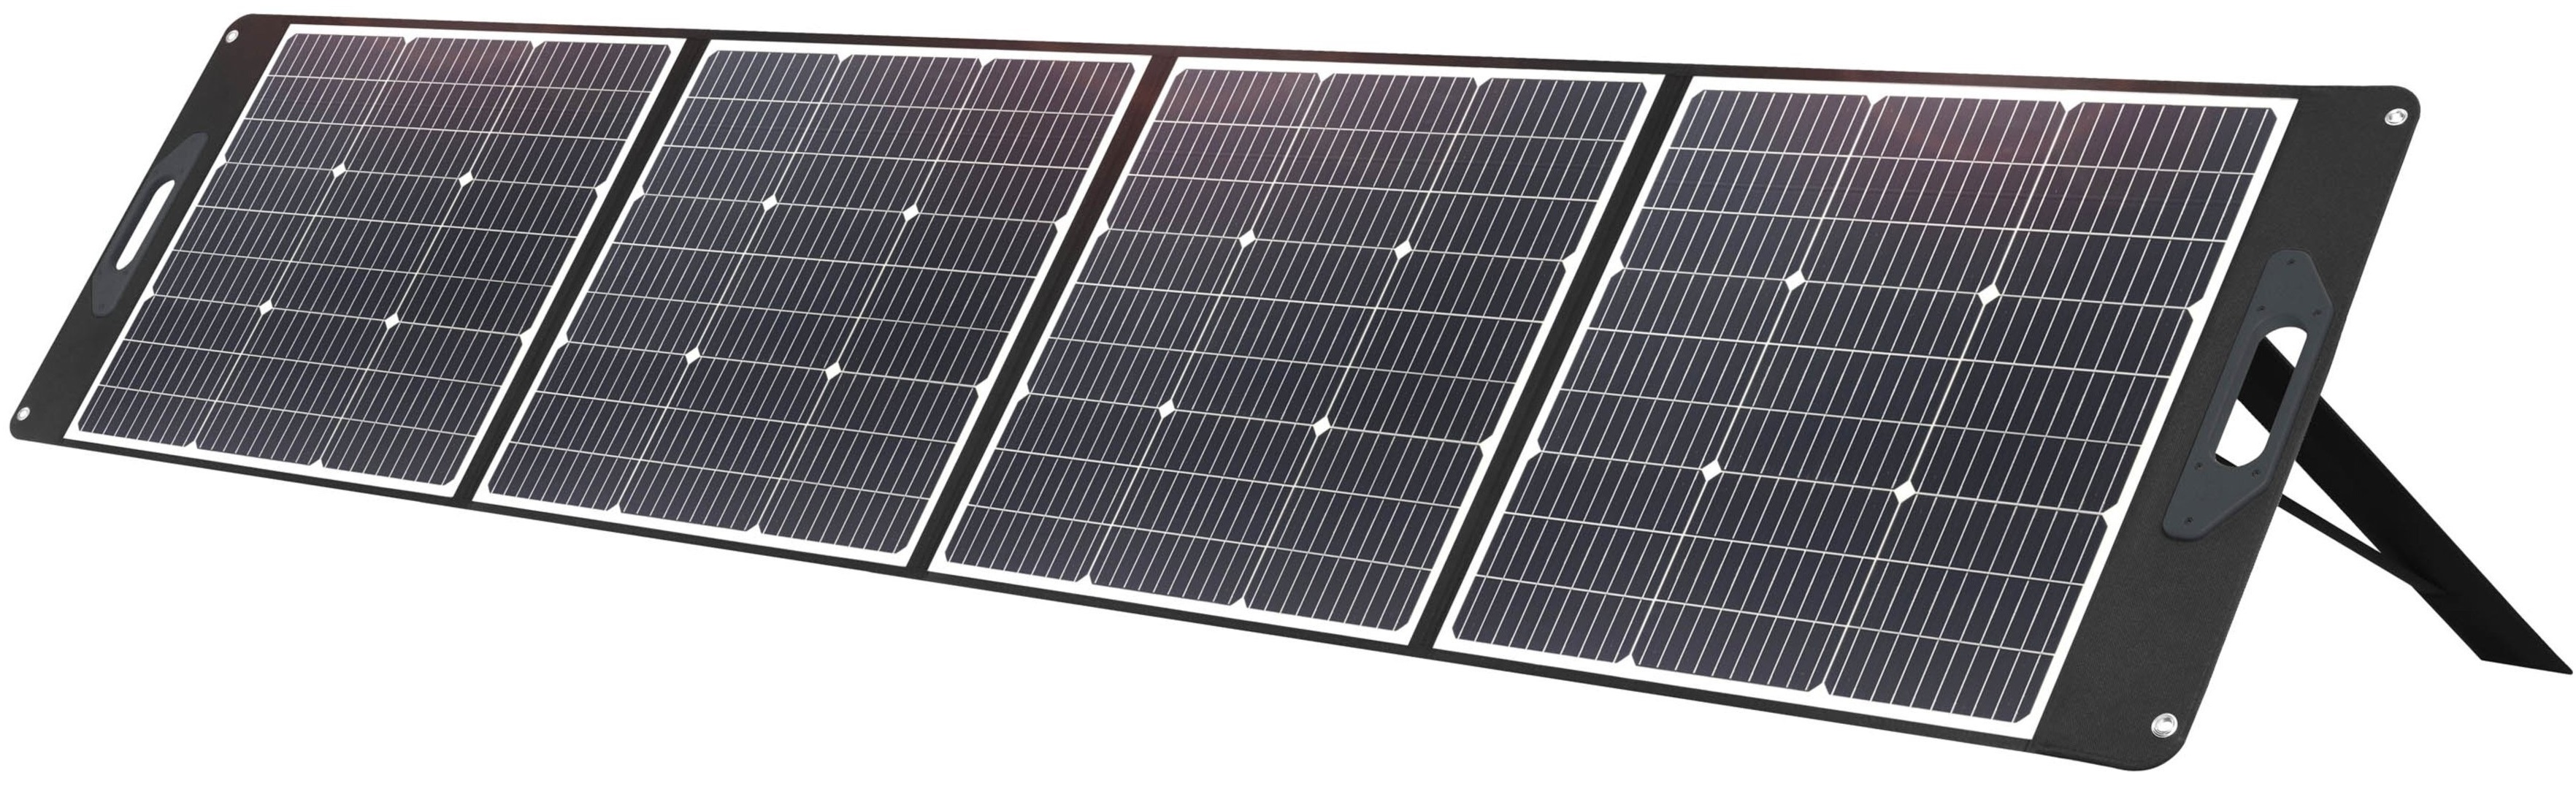 Портативная зарядная станция Segway CUBE 2000, 2584W, 2048Wh + солнечная панель 2E 250 Вт (AA.13.04.02.0007-SET250) фото 3